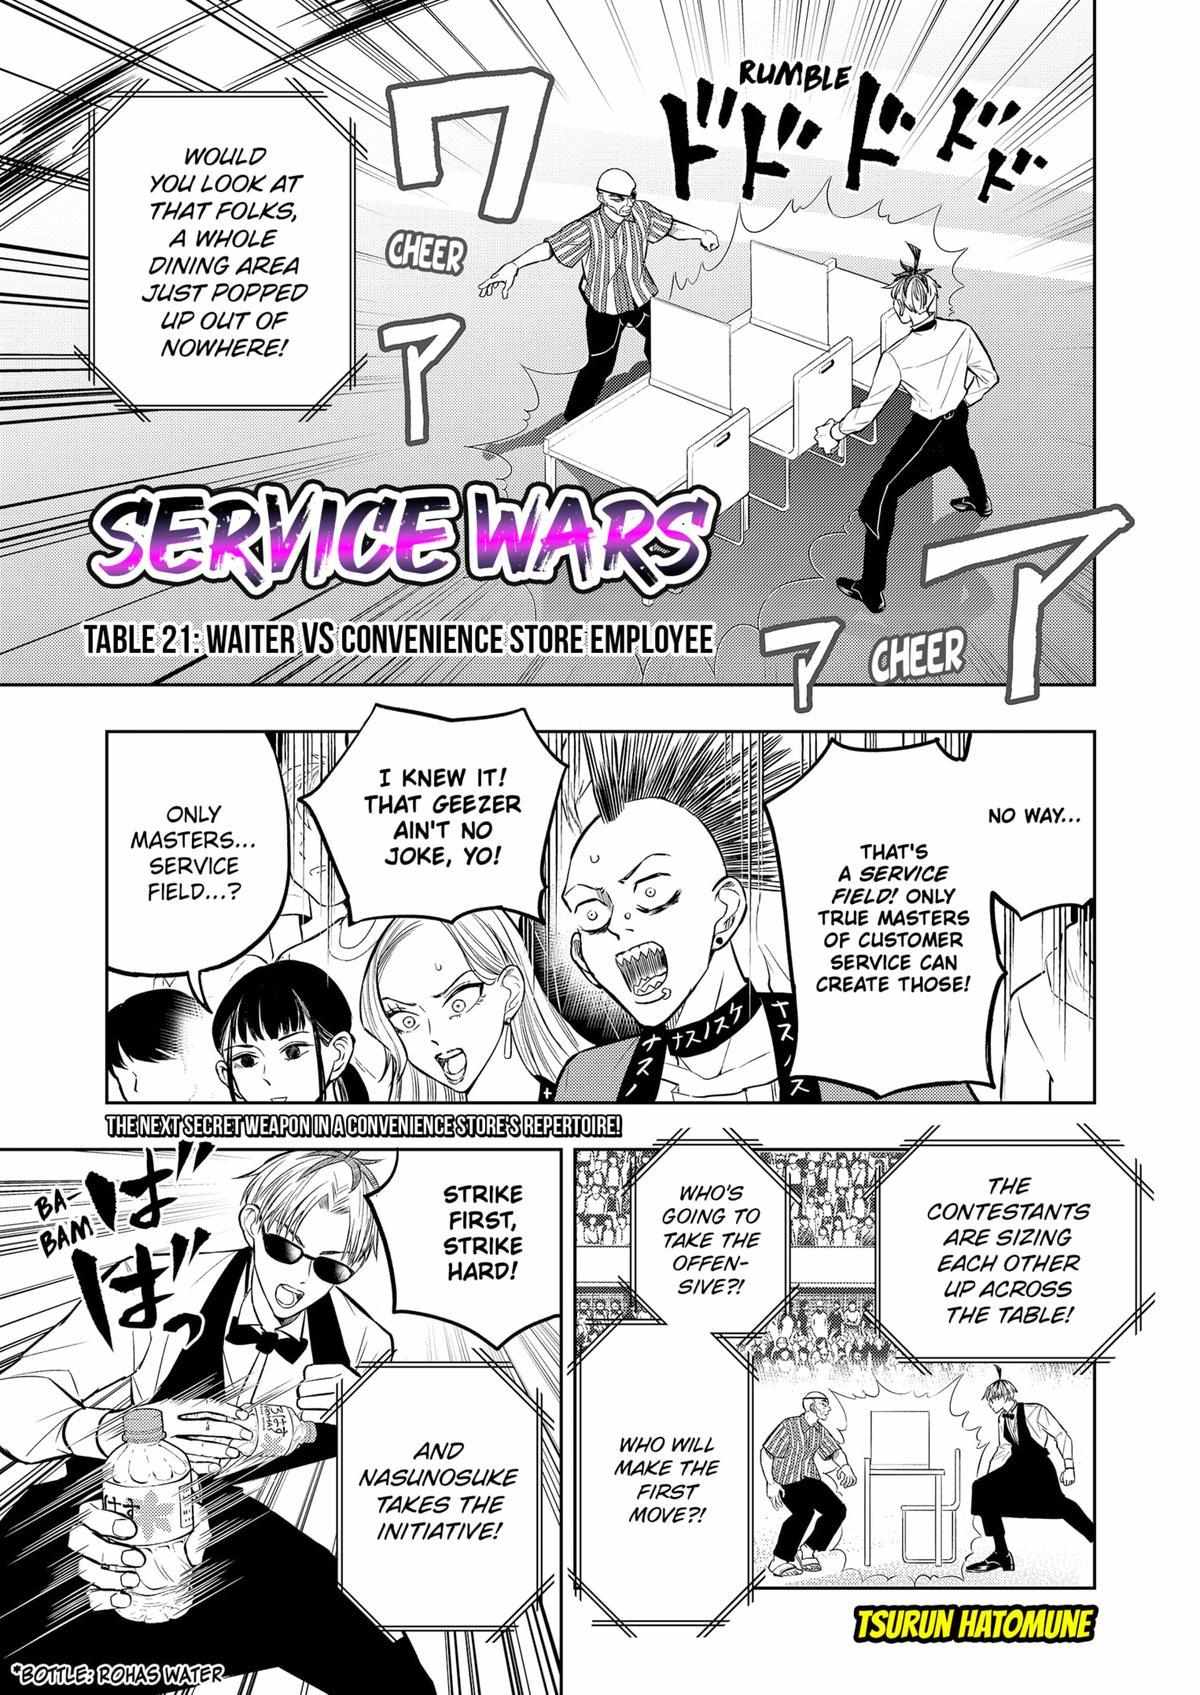 Service Wars - Page 1